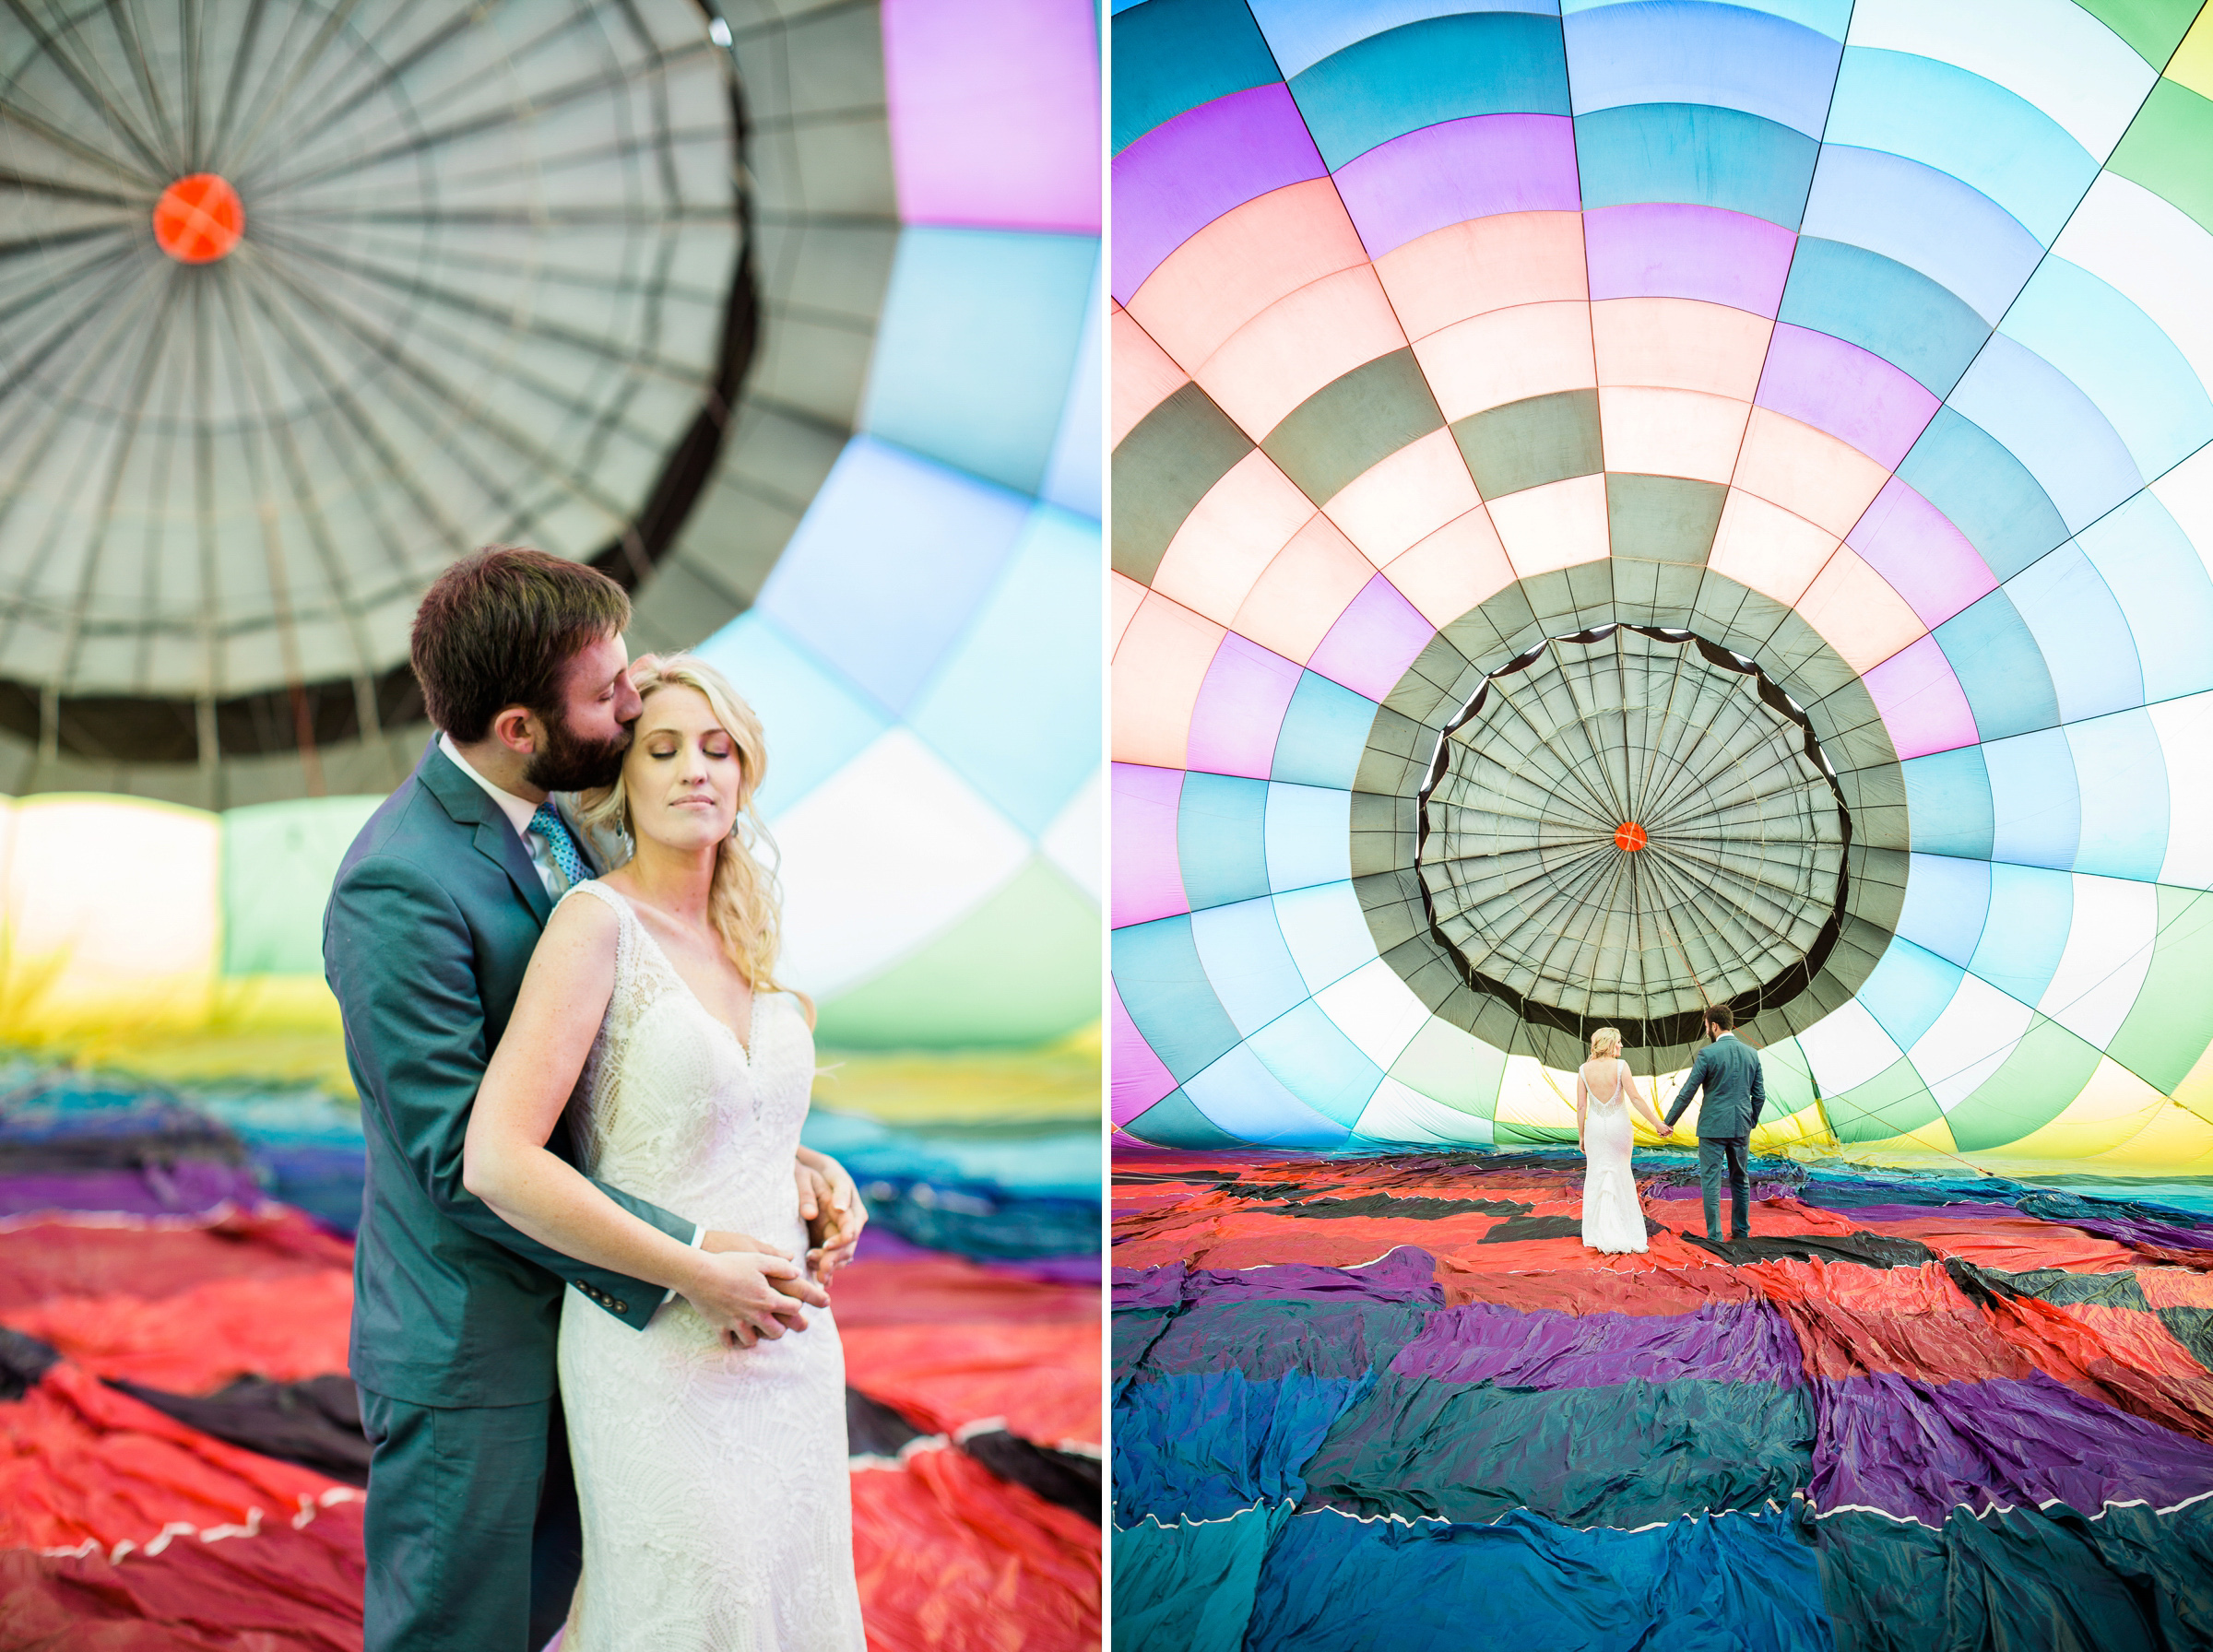 21-Snohomish-Ballooning-Elopement-Wedding-Photography-Hot-Air-Balloon-Seattle-Photographer